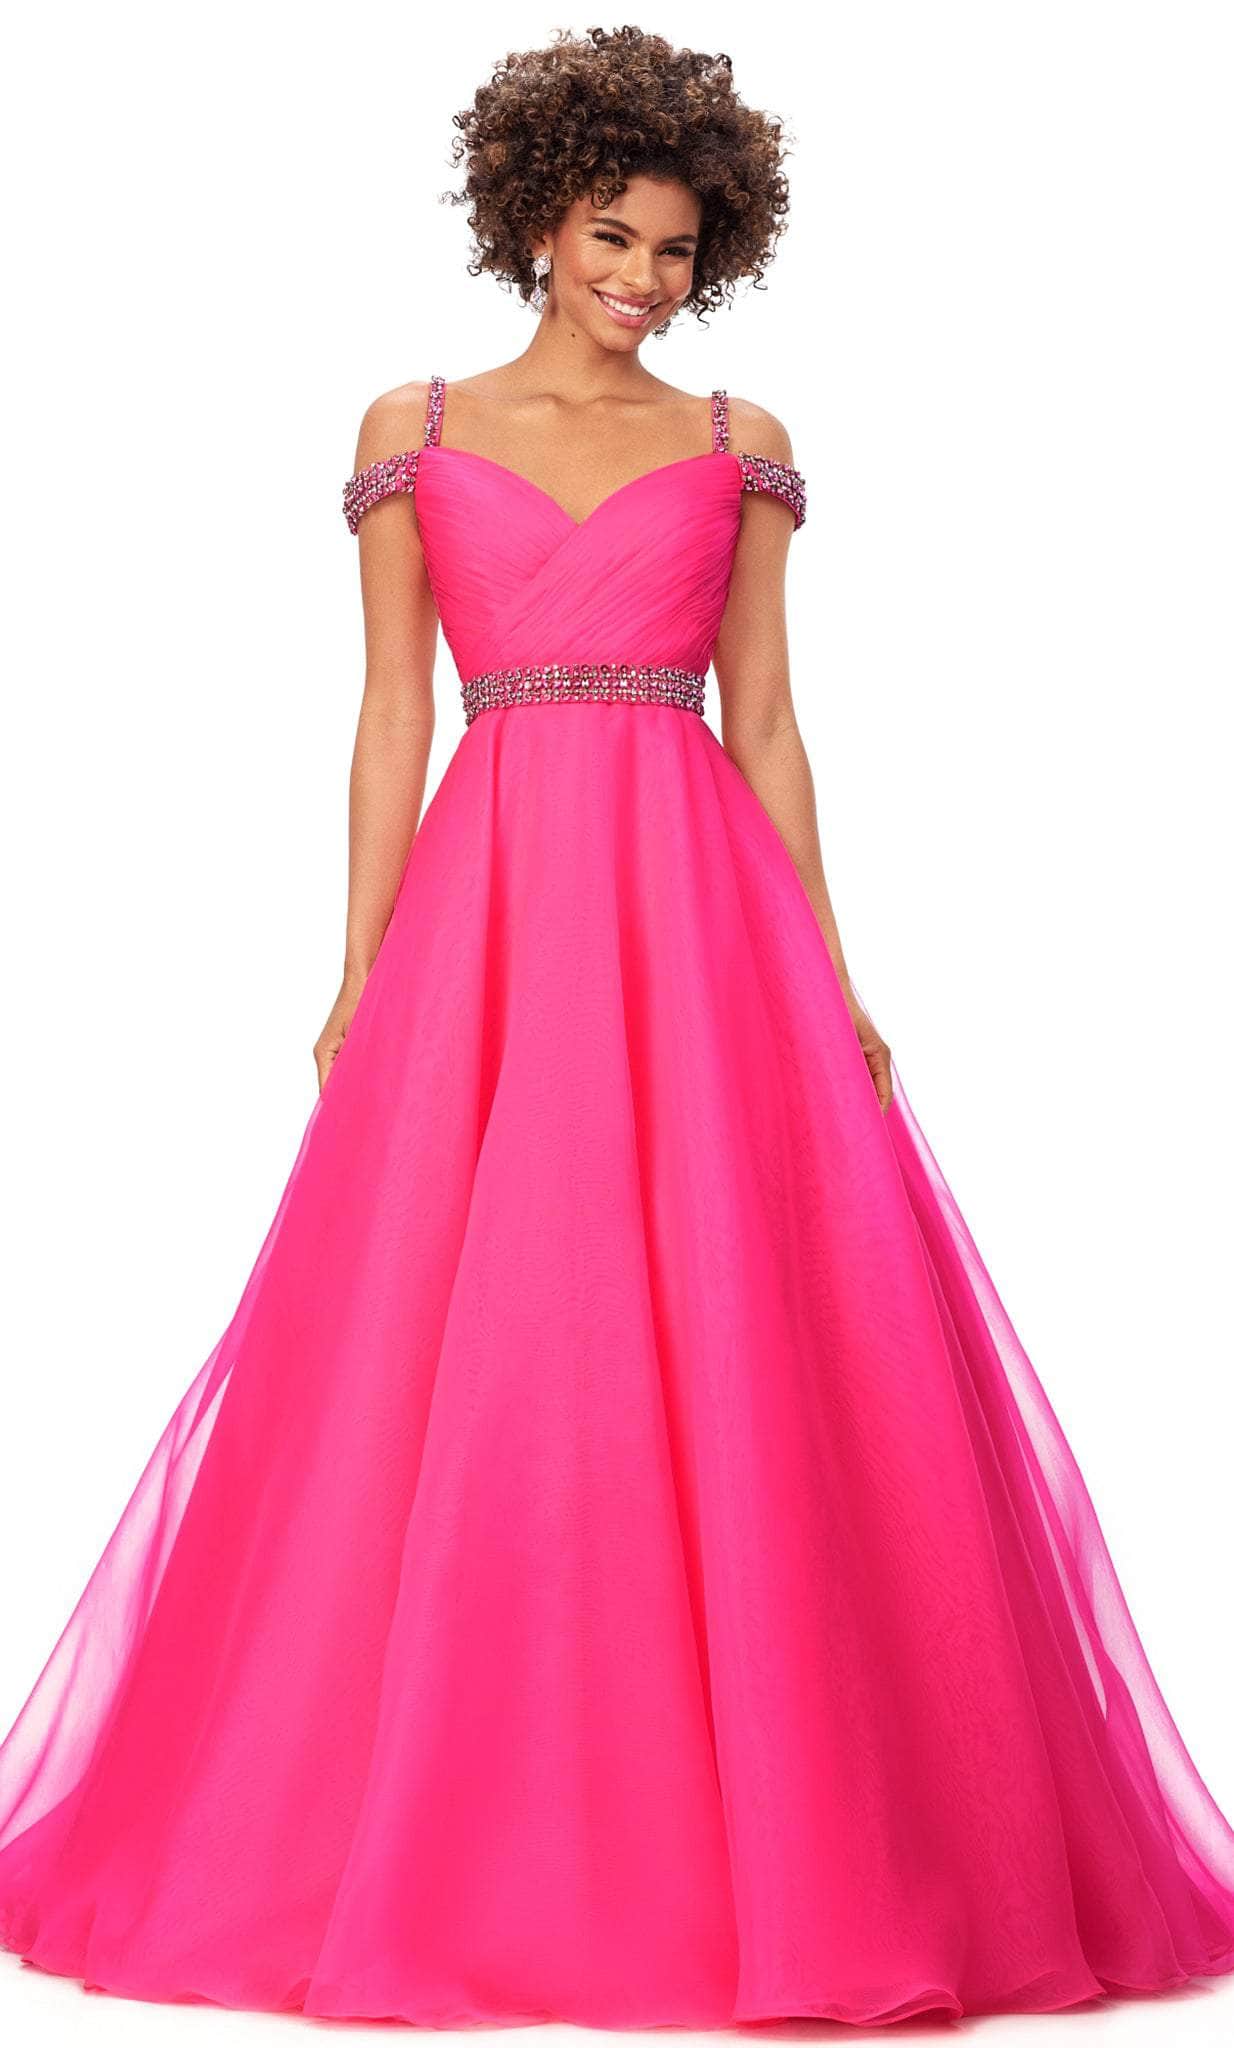 Ashley Lauren 11221 - Off-Shoulder Sweetheart Neck Ballgown Special Occasion Dress 0 / Hot Pink